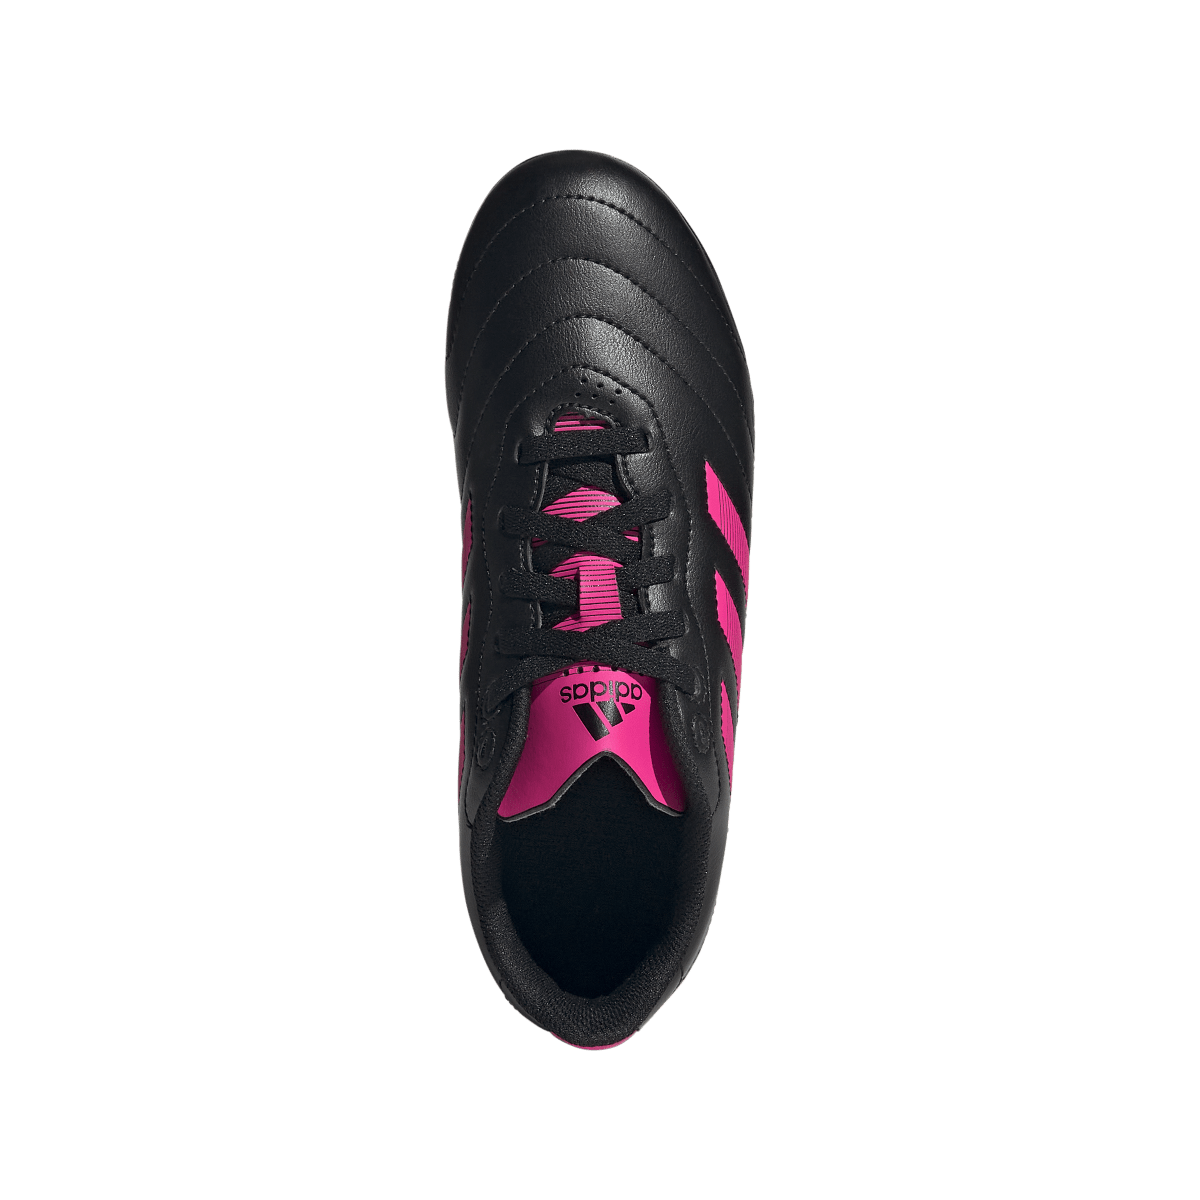 ADIDAS Goletto Soccer Shoes BLACK & HOT PINK Boys Girls Size 2 ❤️sj7m68